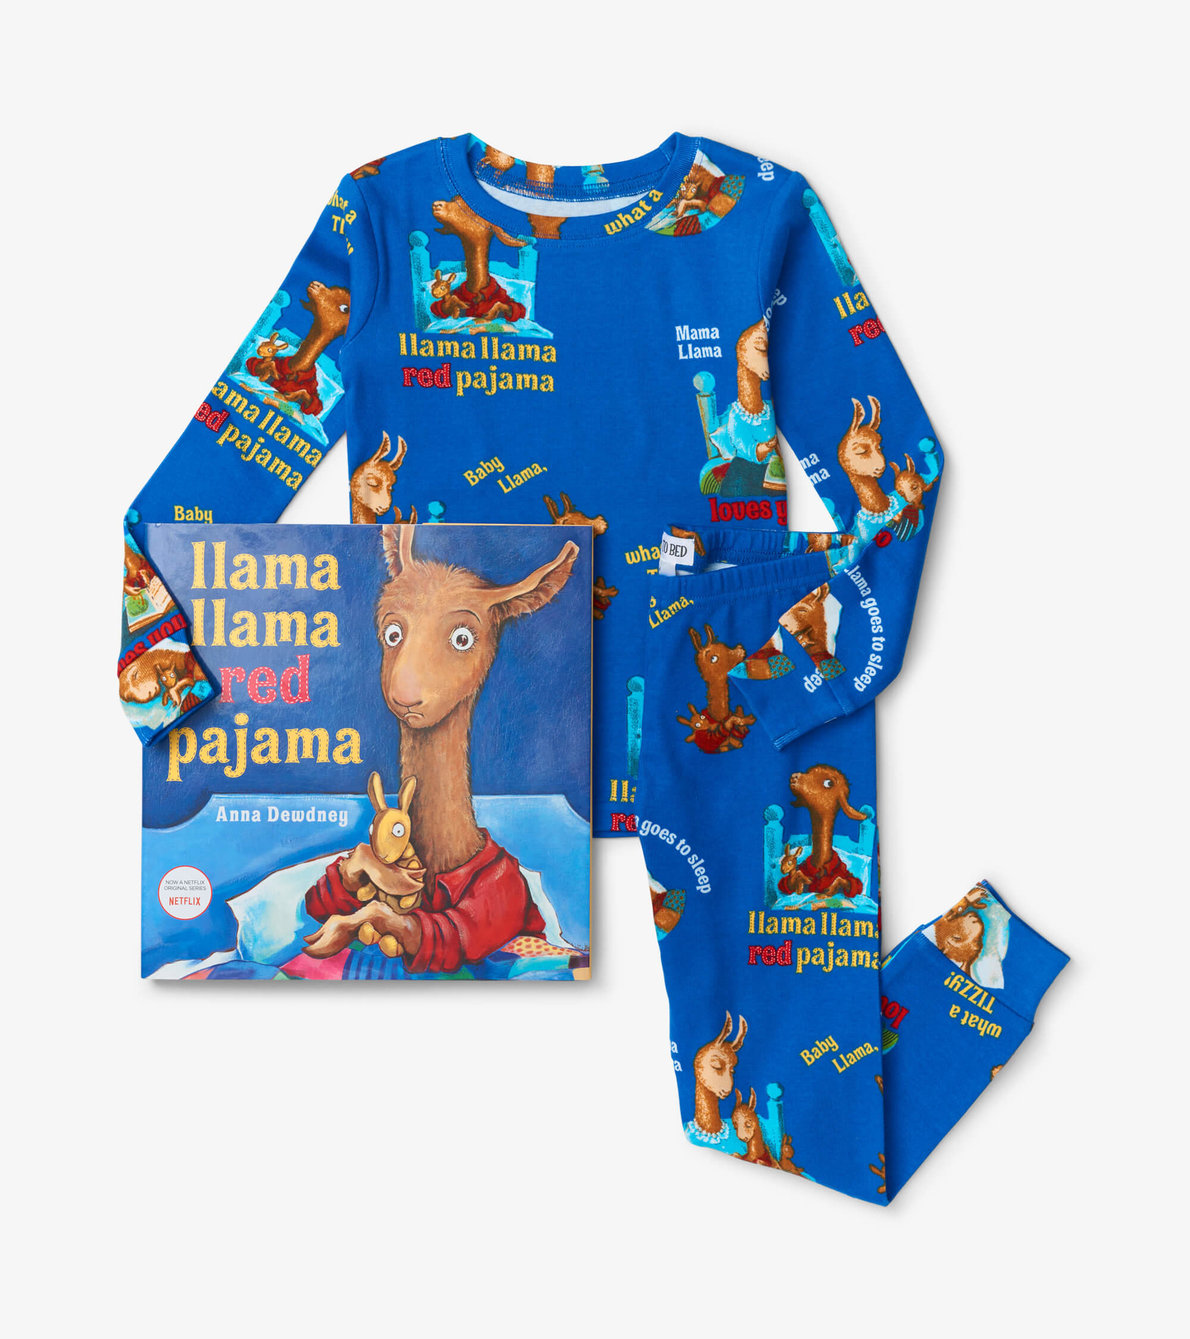 View larger image of Llama Llama Red Pajama Book and Pajama Set